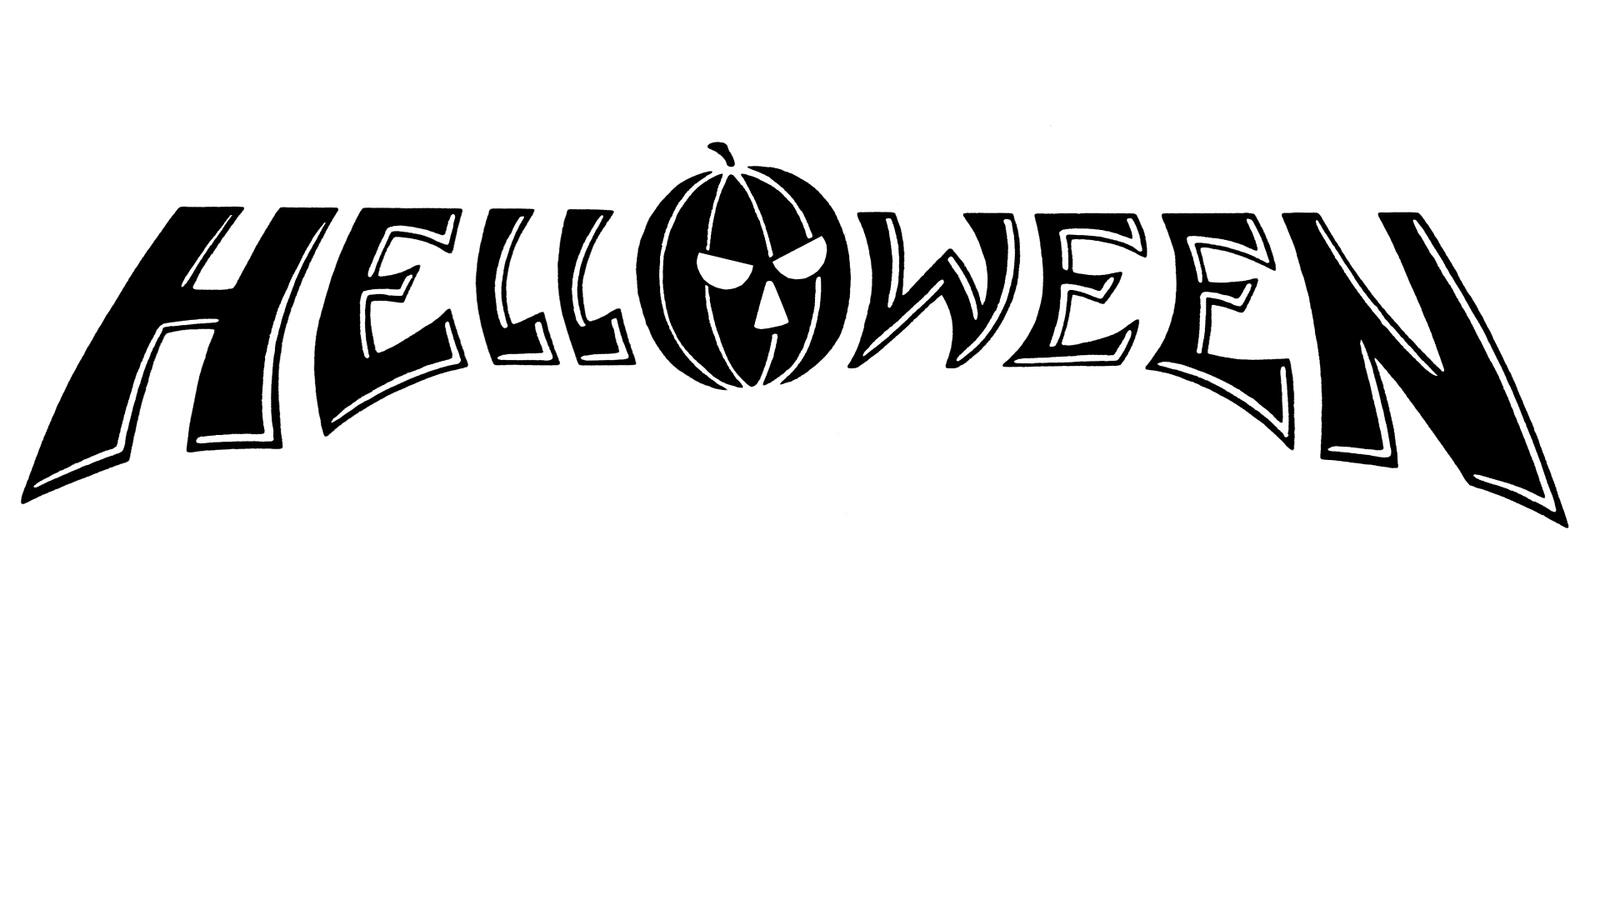 Бесплатное фото Логотип хэллоуин